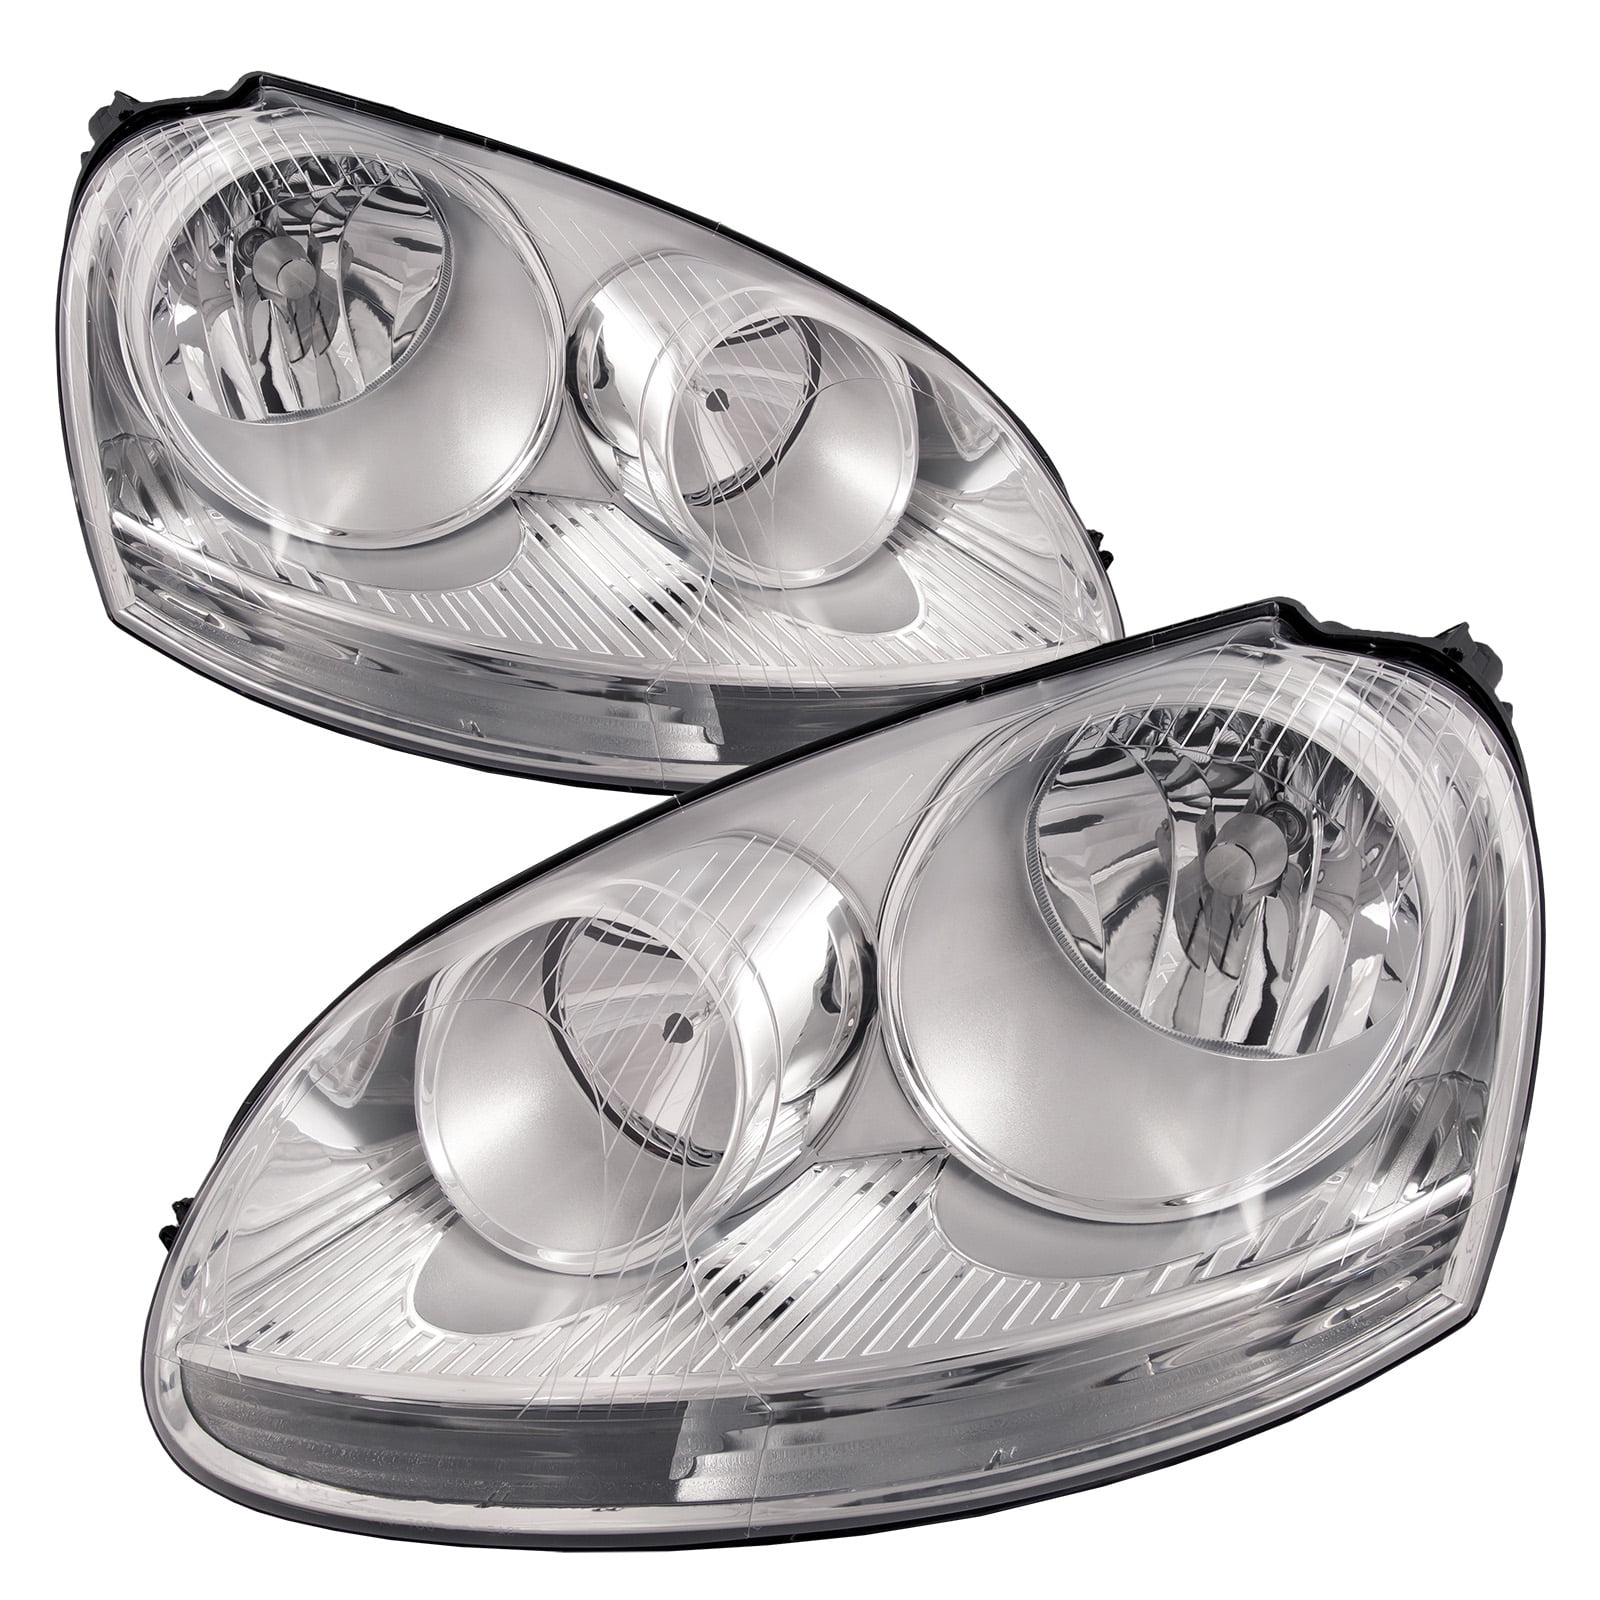 VW Jetta 2006-2011 Chrome Front Headlight Headlamp O/S Drivers Right 